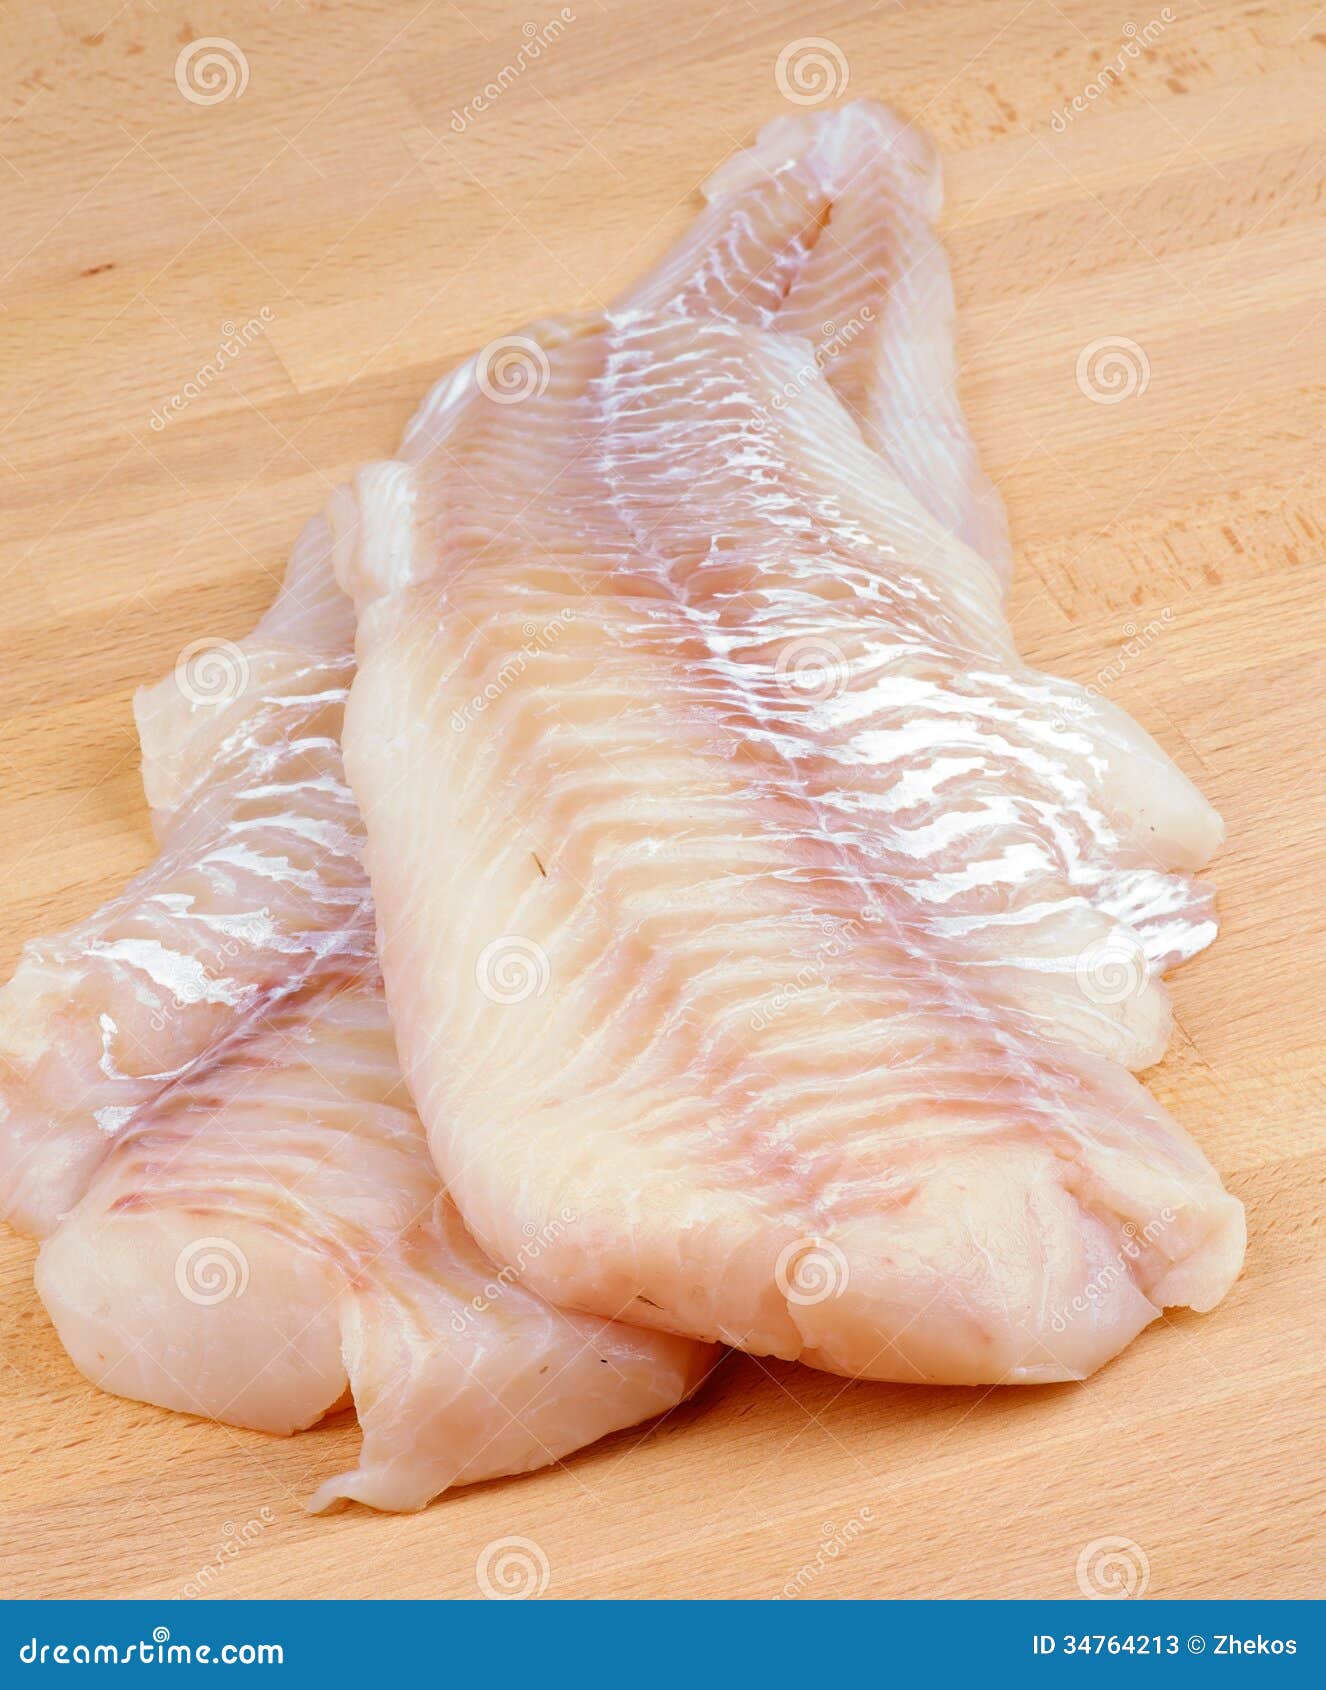 raw-cod-fish-two-slices-fresh-fillet-closeup-wooden-cutting-board-34764213.jpg